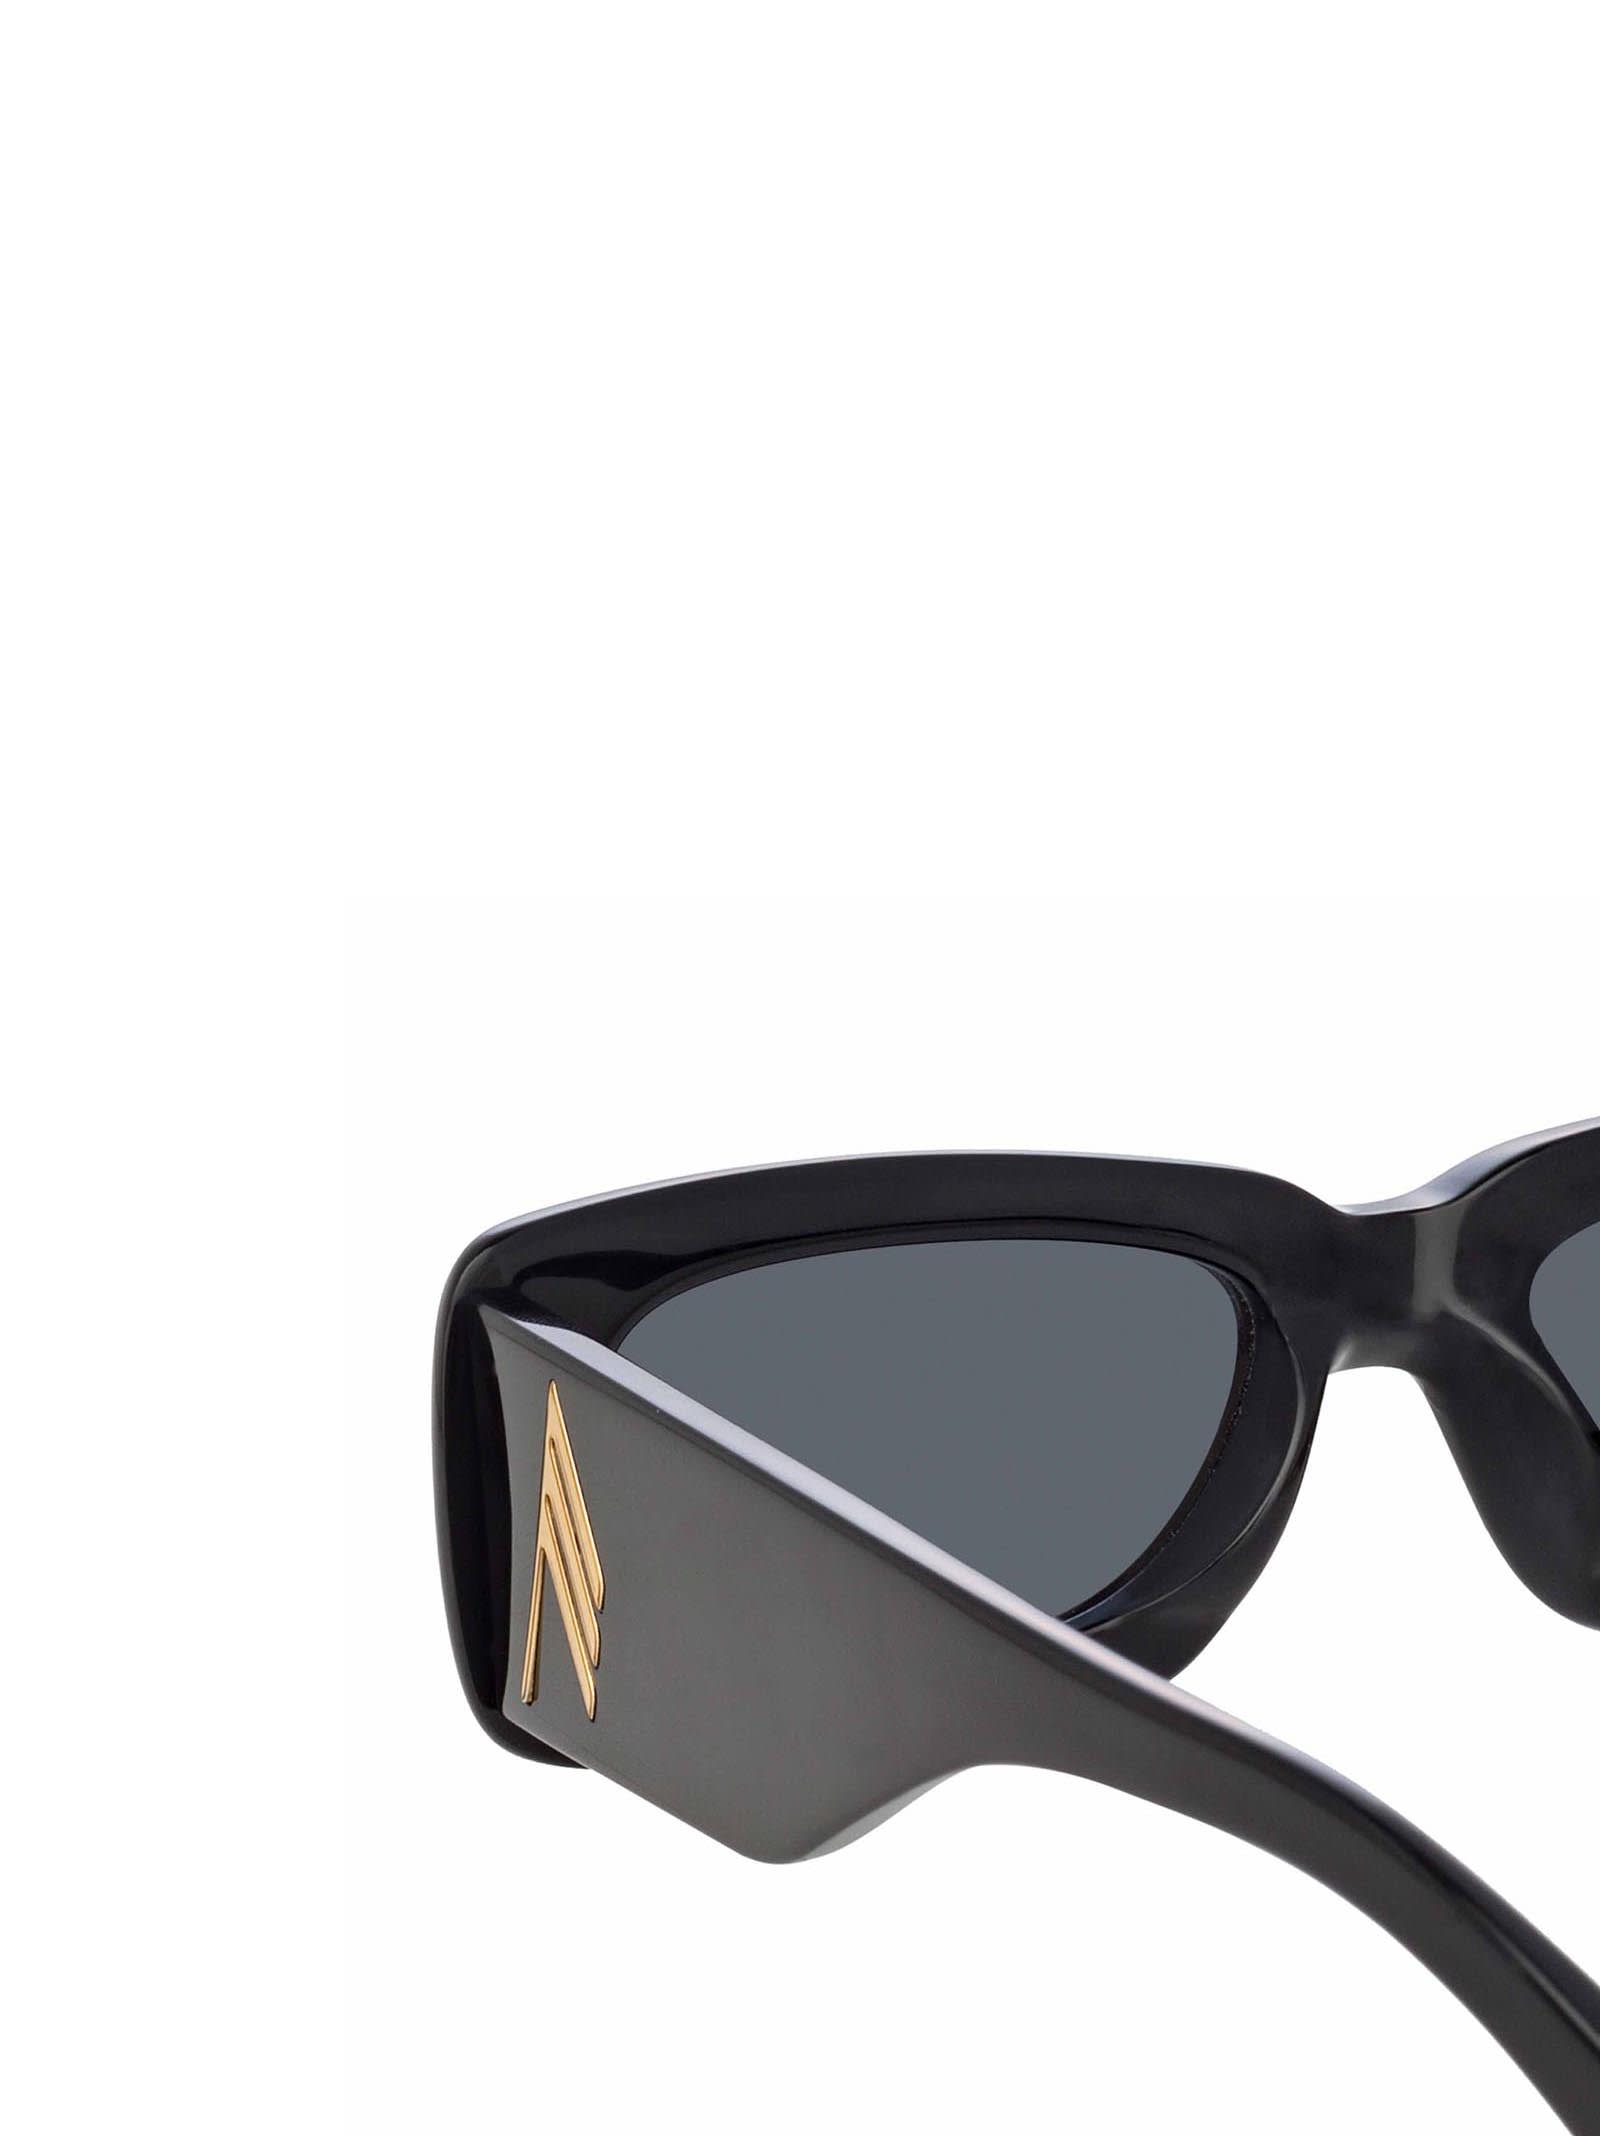 Shop Linda Farrow Attico16 Black / Yellow Gold Sunglasses